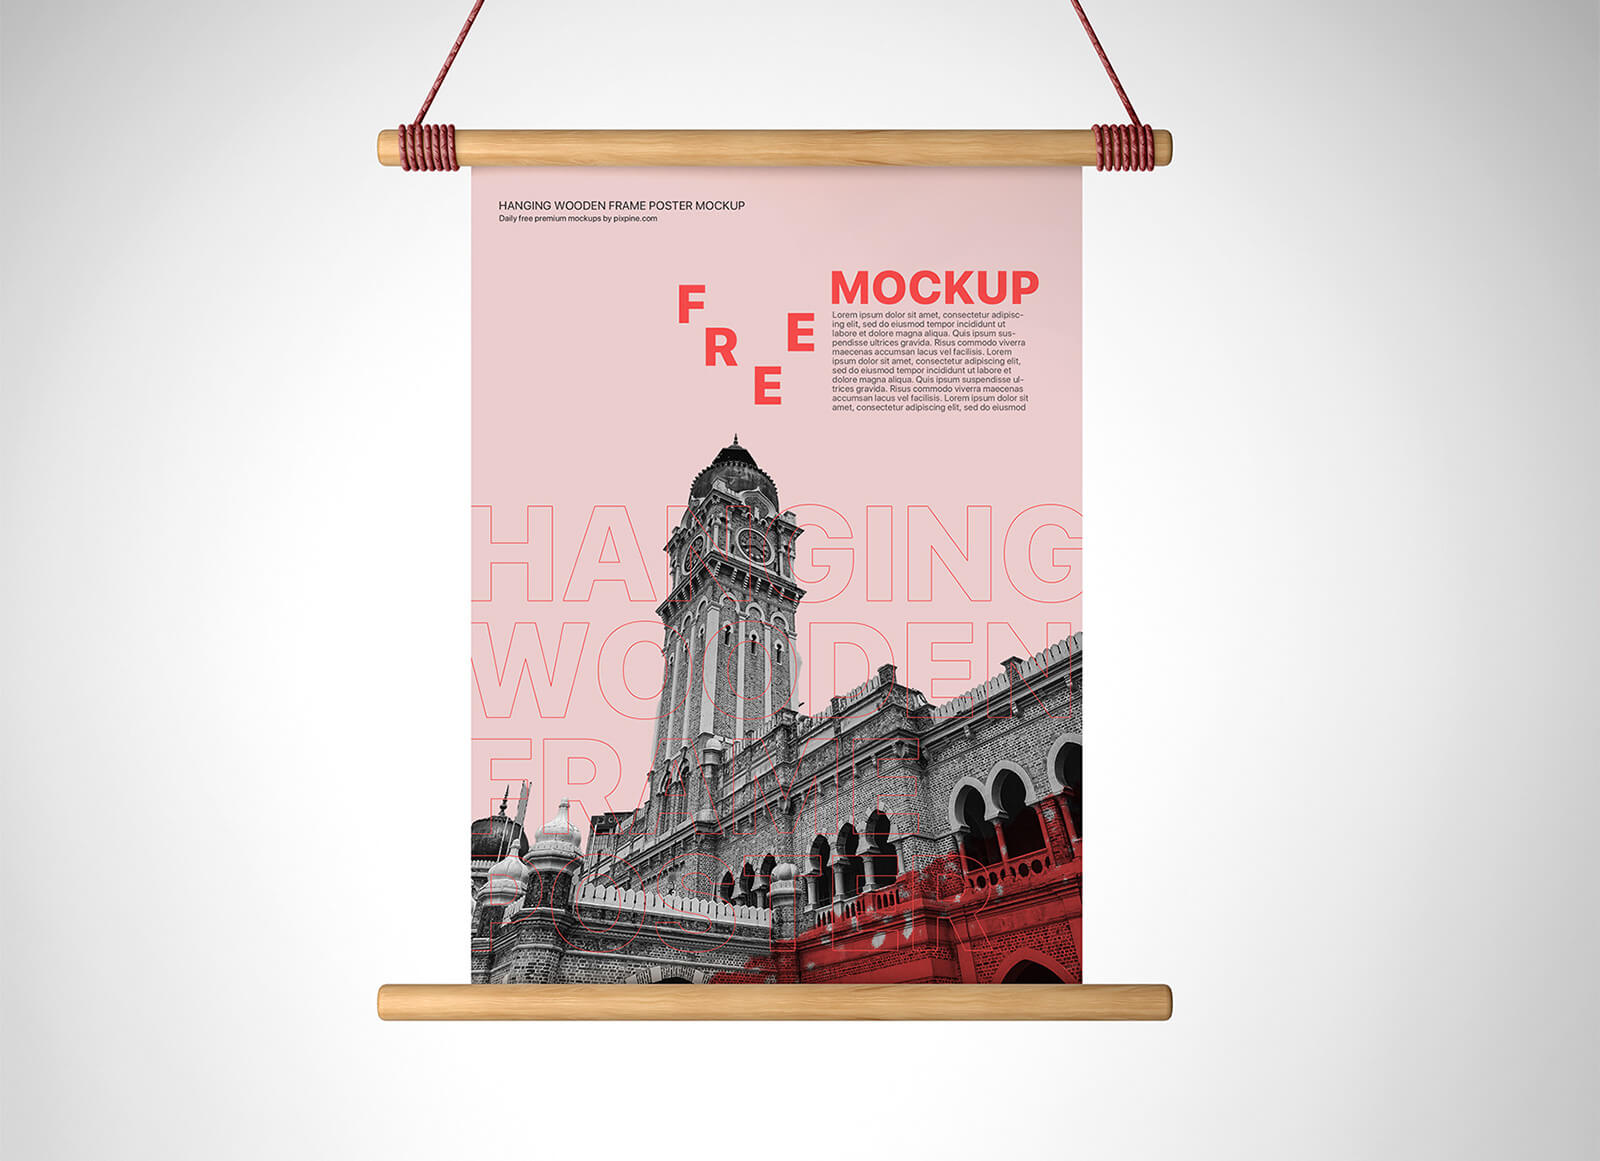 Free-Hanging-Wooden-Frame-Poster-Mockup-PSD